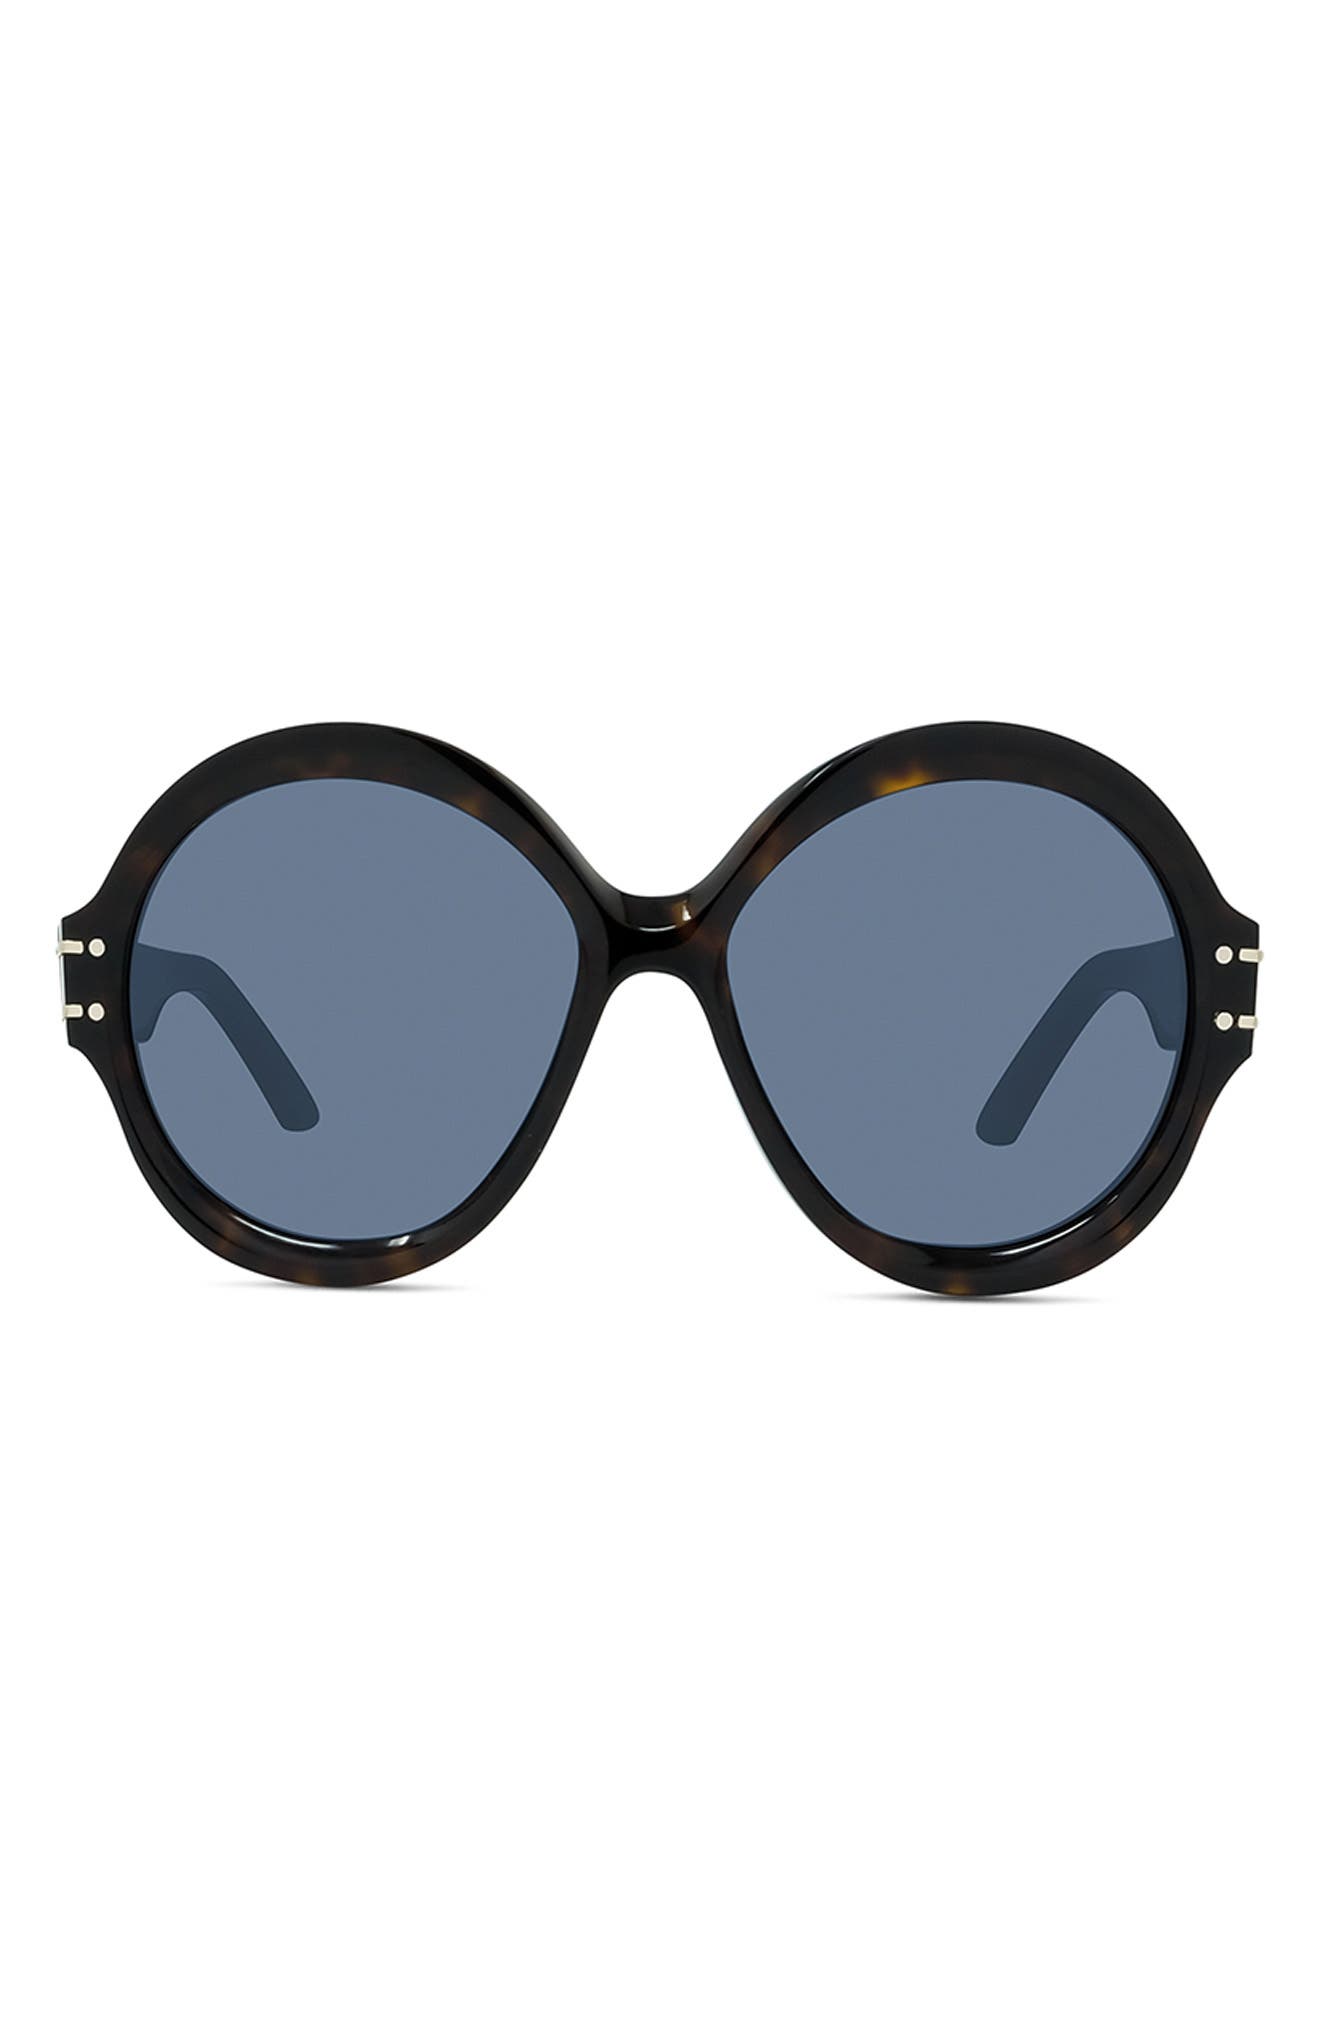 Dior Signature 57mm Round Sunglasses in Blonde Havana /Gradient Smoke